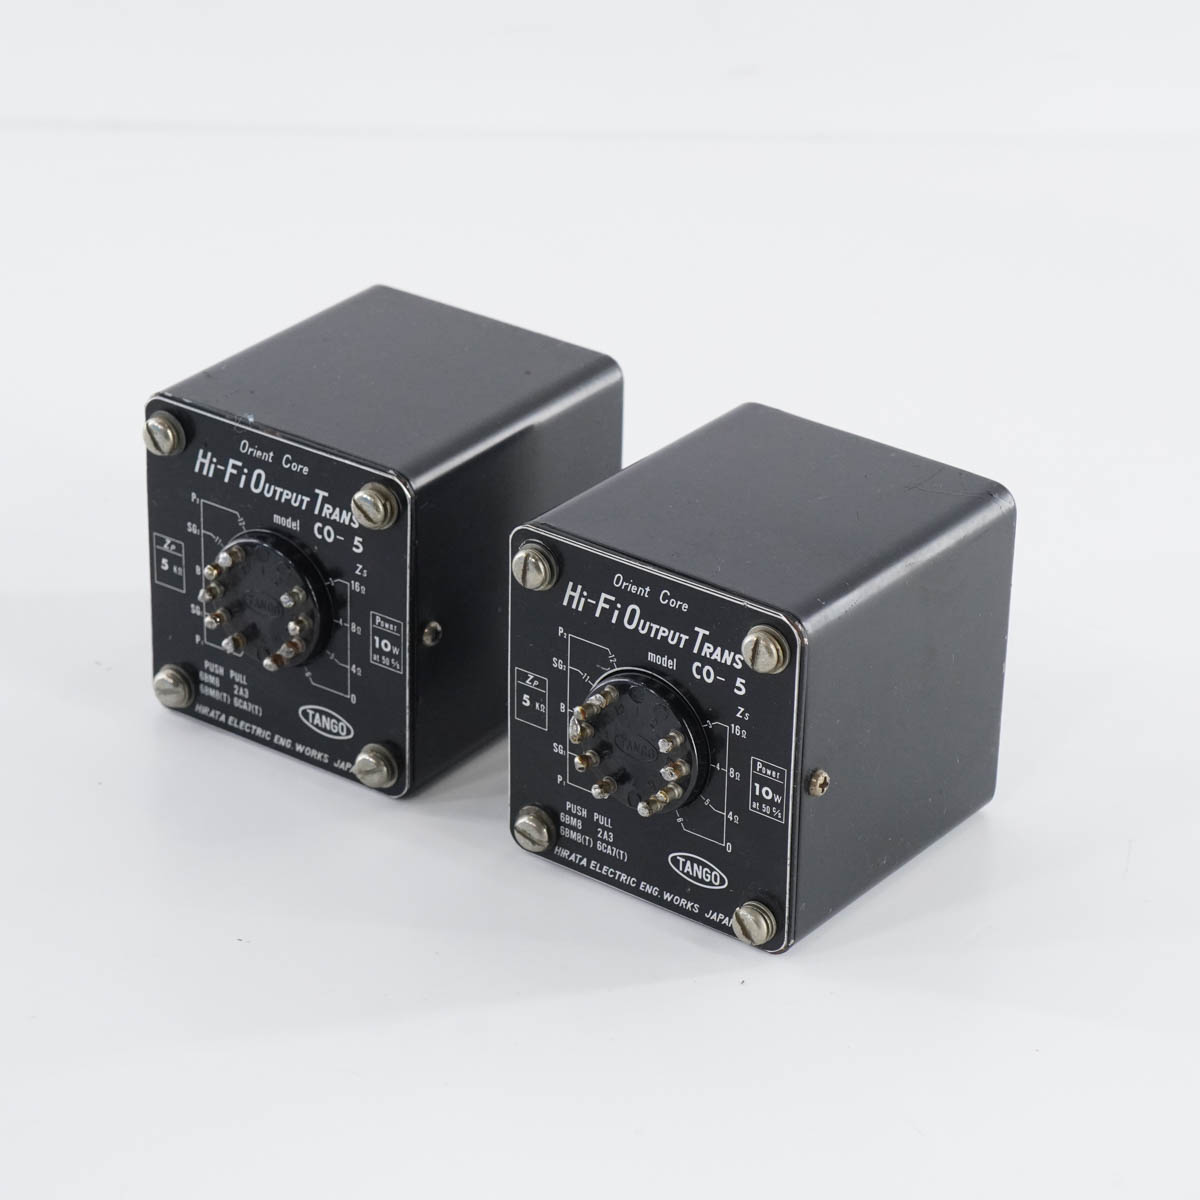 [JB]USED 現状販売 2個セット TANGO CO-5 出力トランス Hi-Fi OUTPUT TRANS  [05348-0261]-中古販売分析機器計測器総合商社ディルウィングス